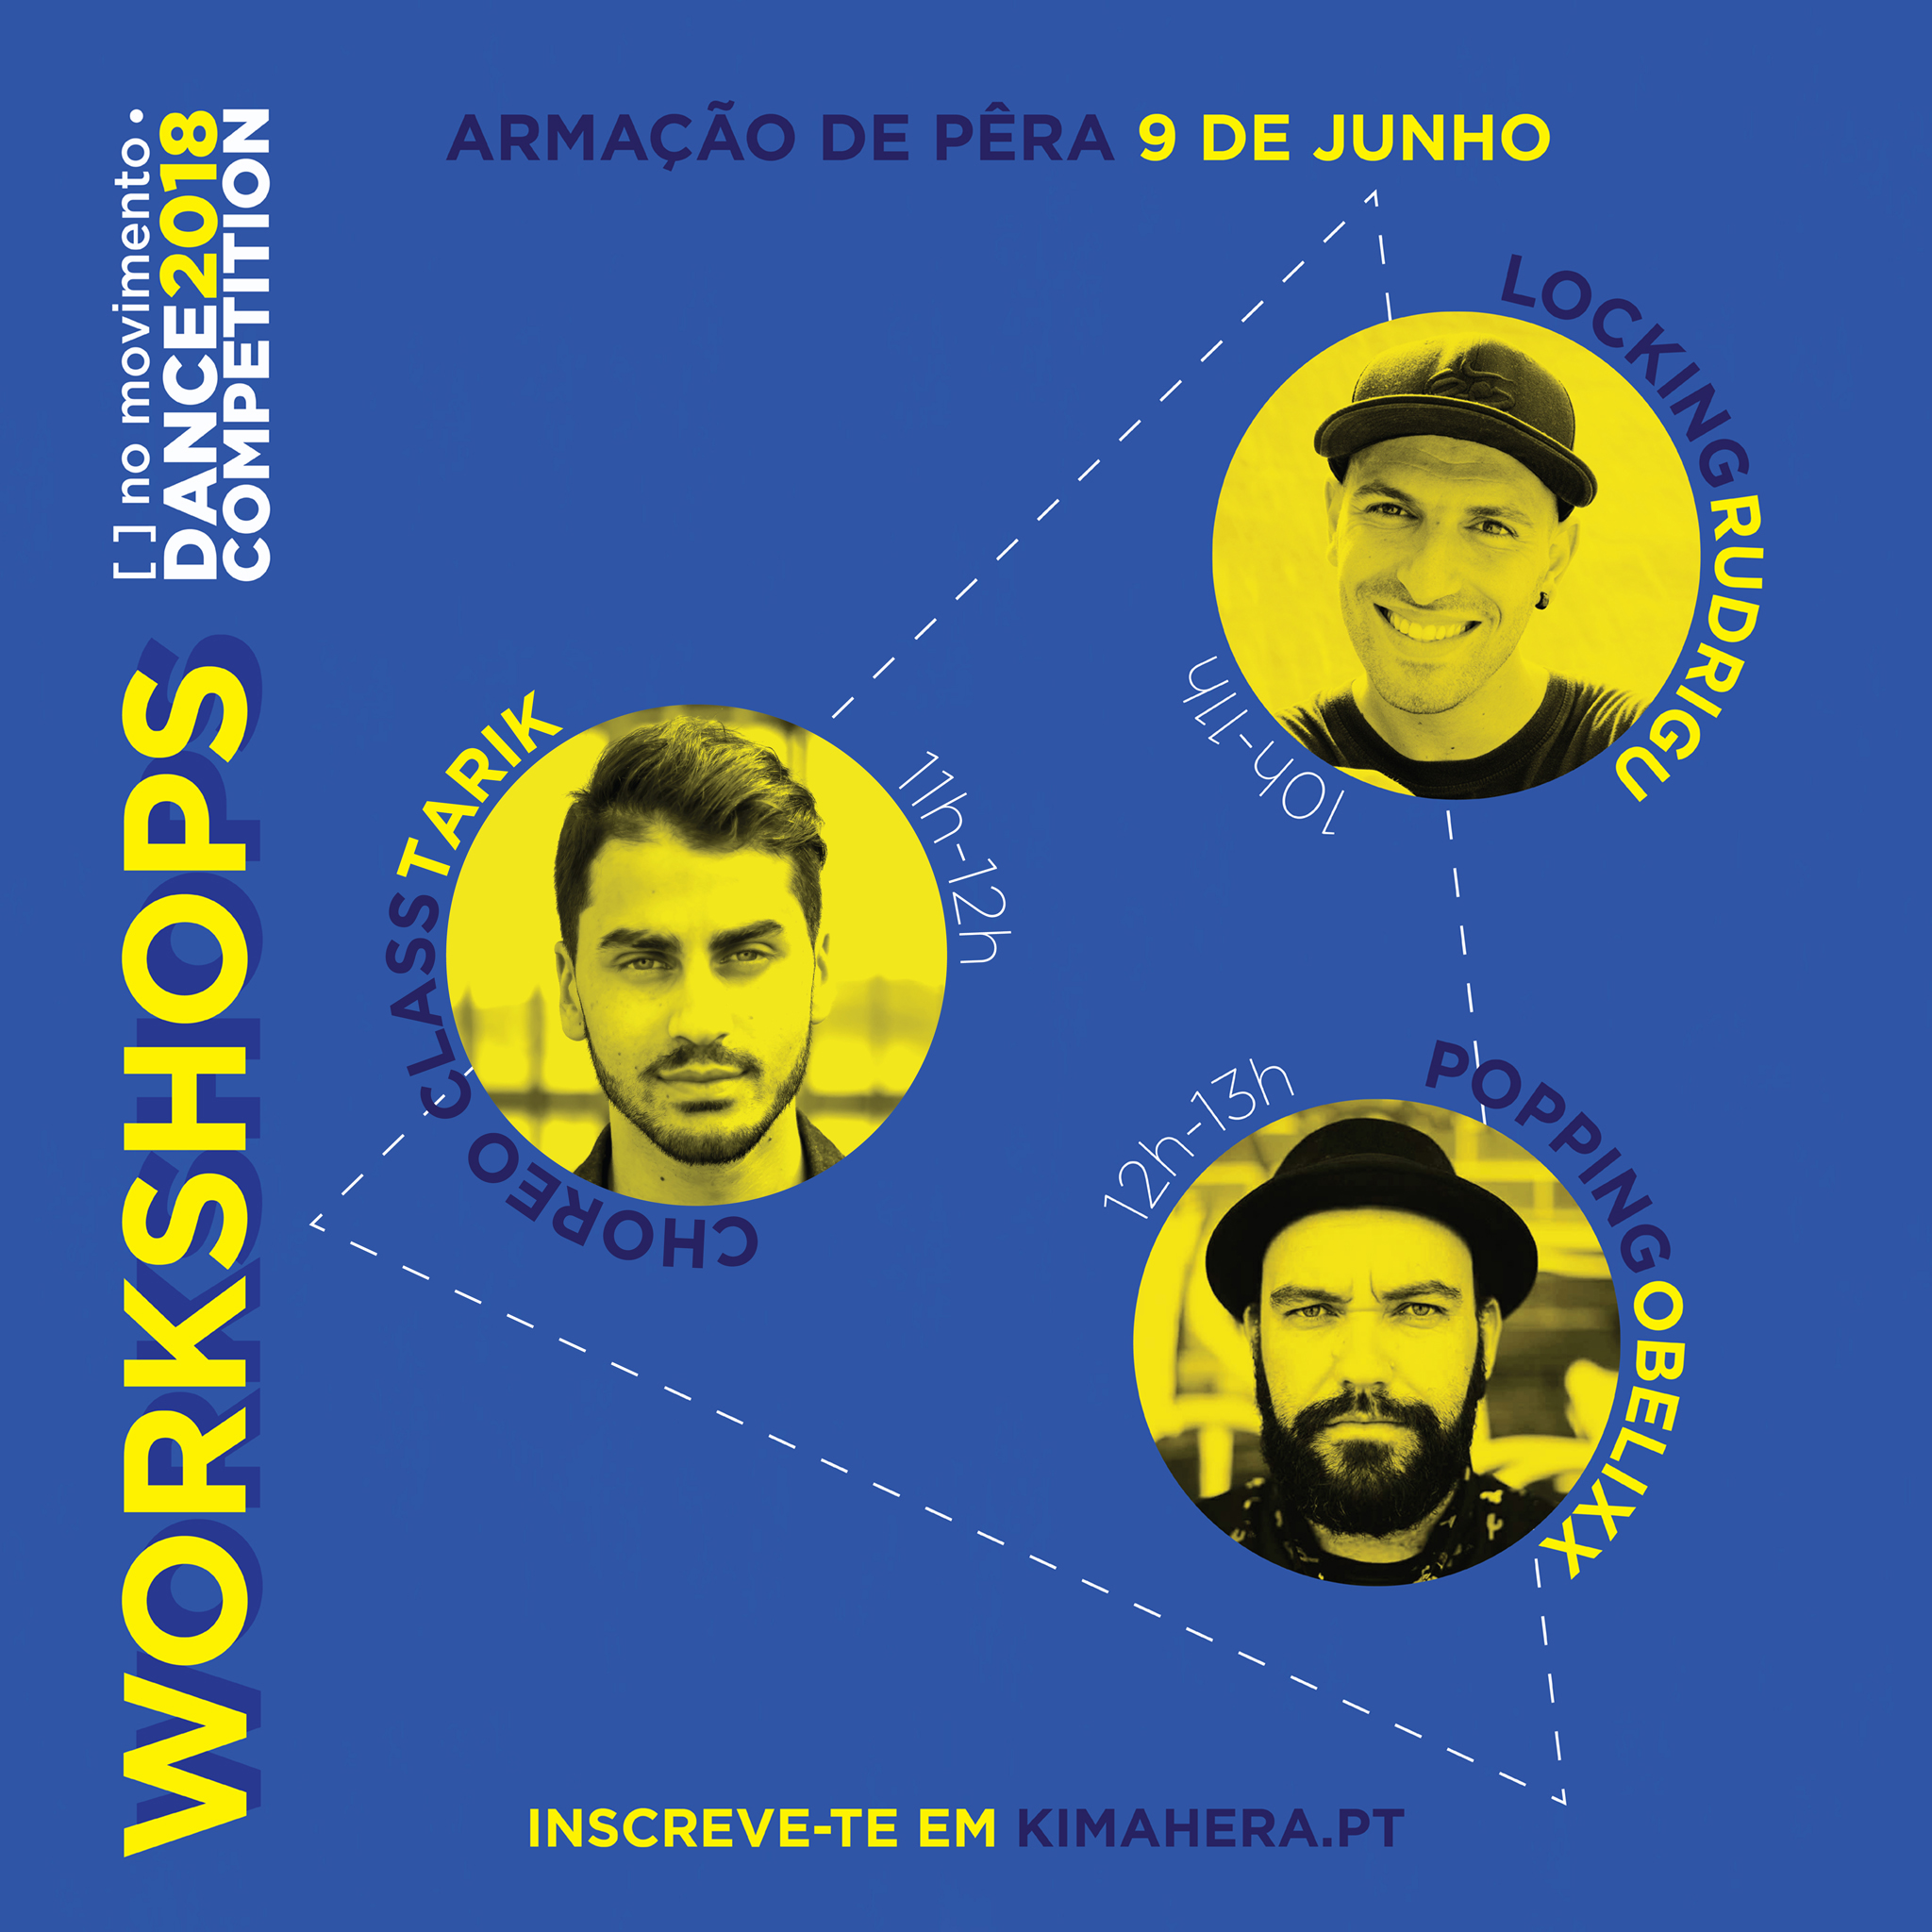 Workshops [ ] no movimento • Dance Competition 2018